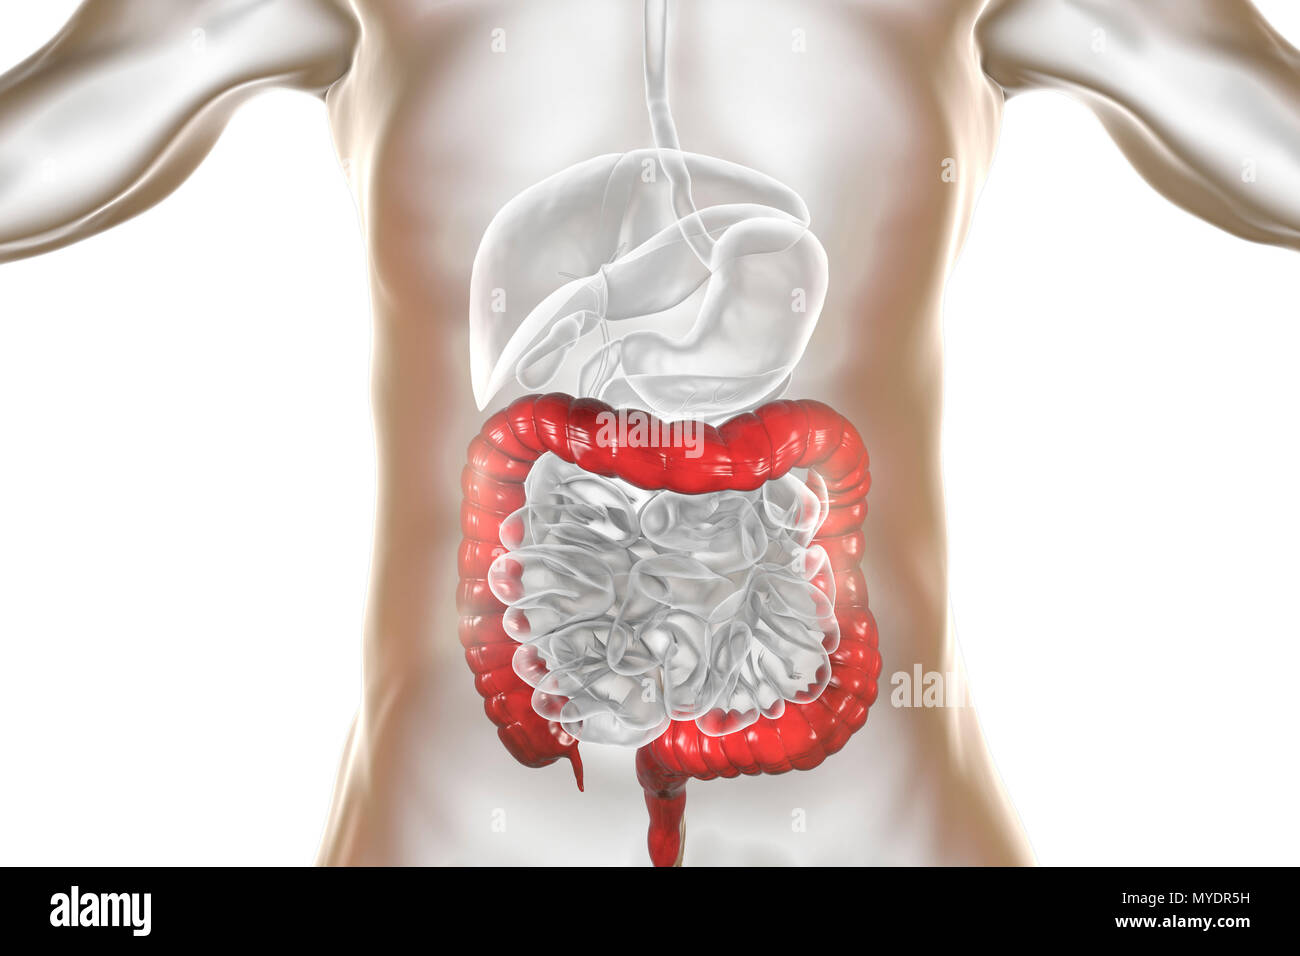 Human large intestine, computer illustration. Stock Photo